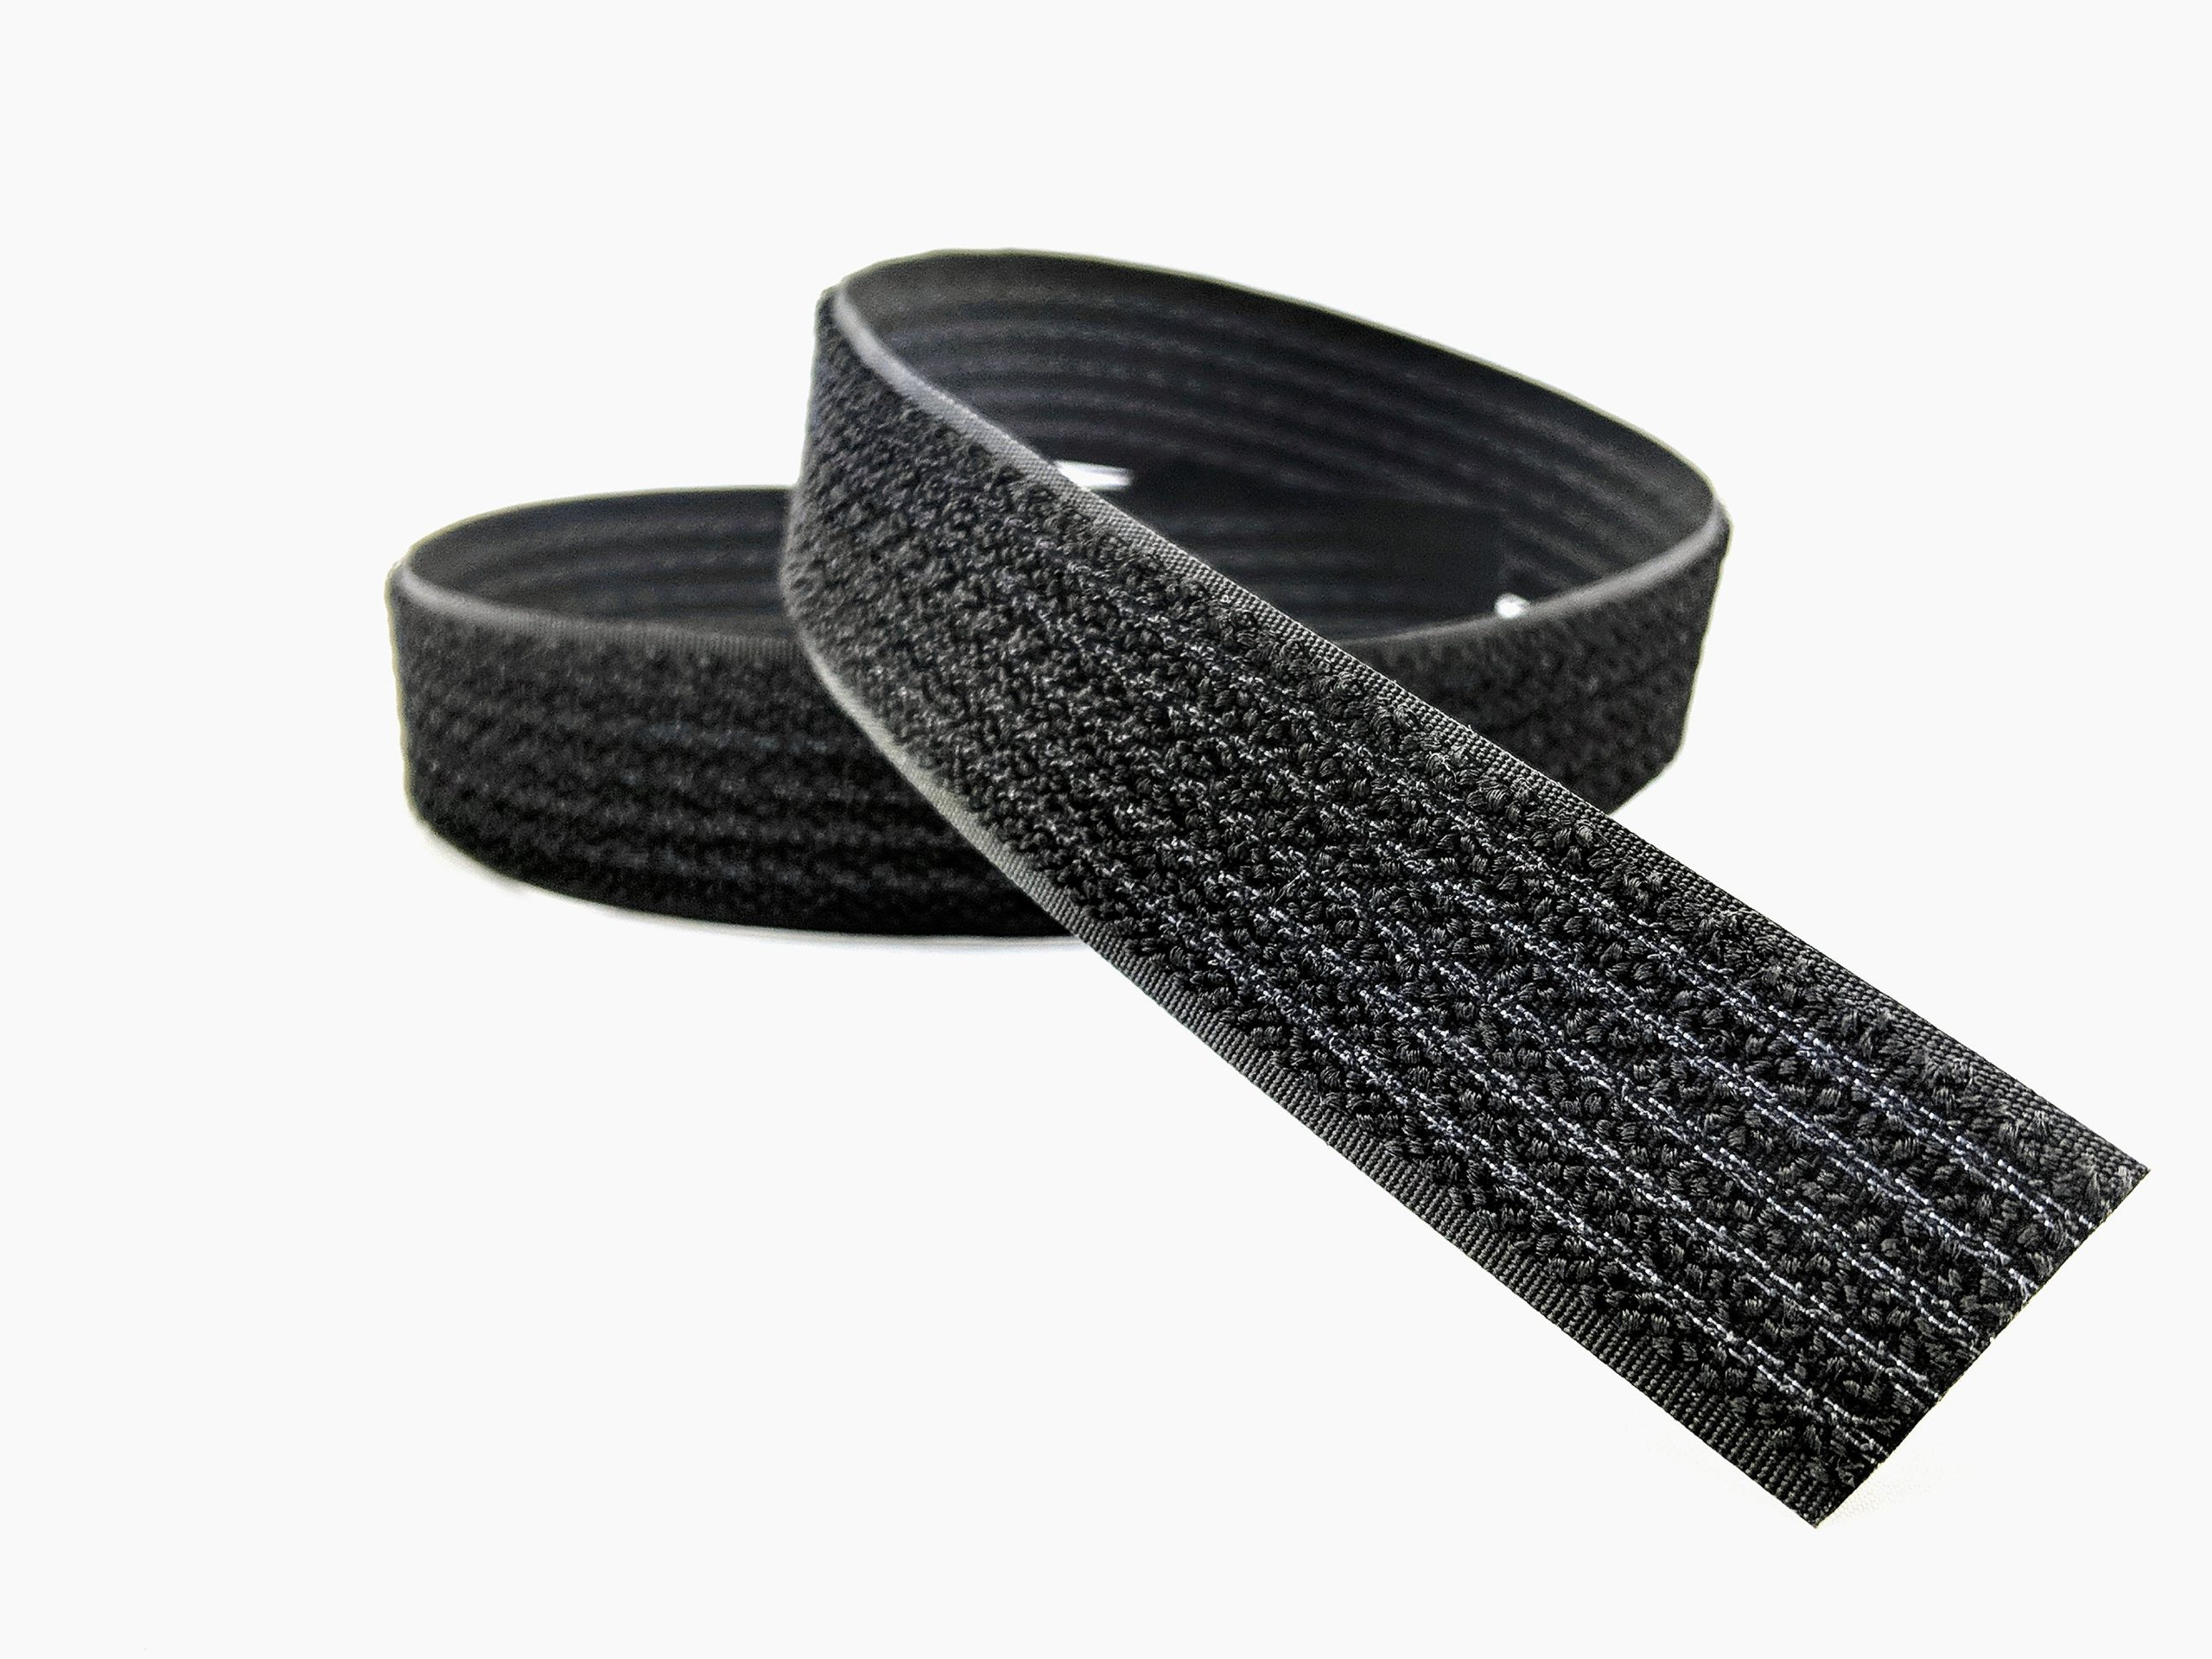 Hook-and-loop fastener aka Velcro in closeup, isolated on black